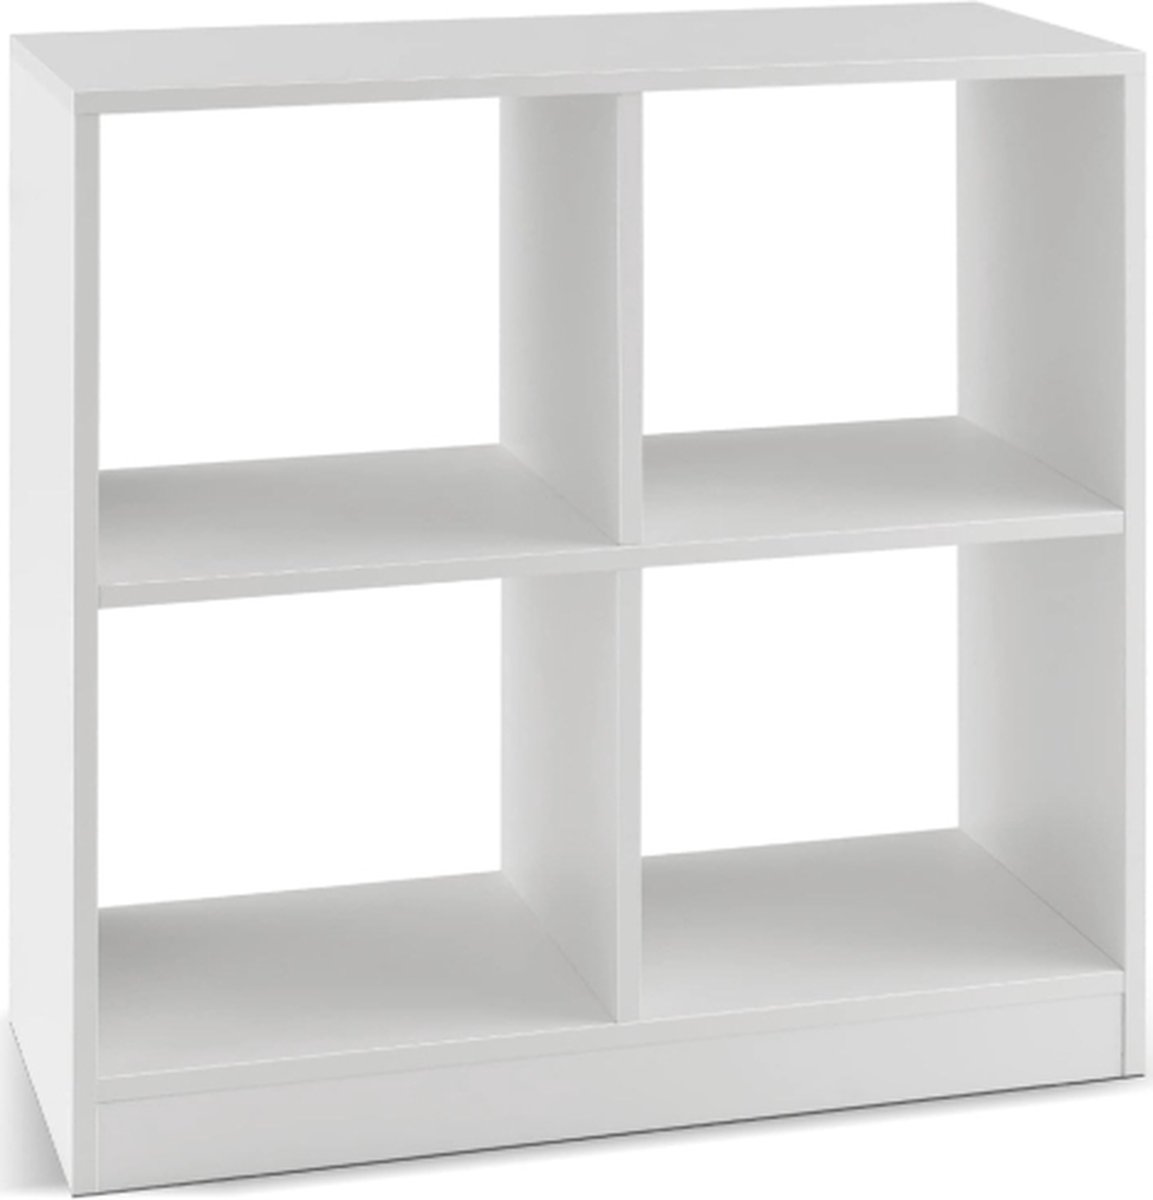 Boekenkast met 4 vakken, kubusrek, wit, staand rek, opbergrek, rek voor slaapkamer, woonkamer, 73 x 33 x 73 cm